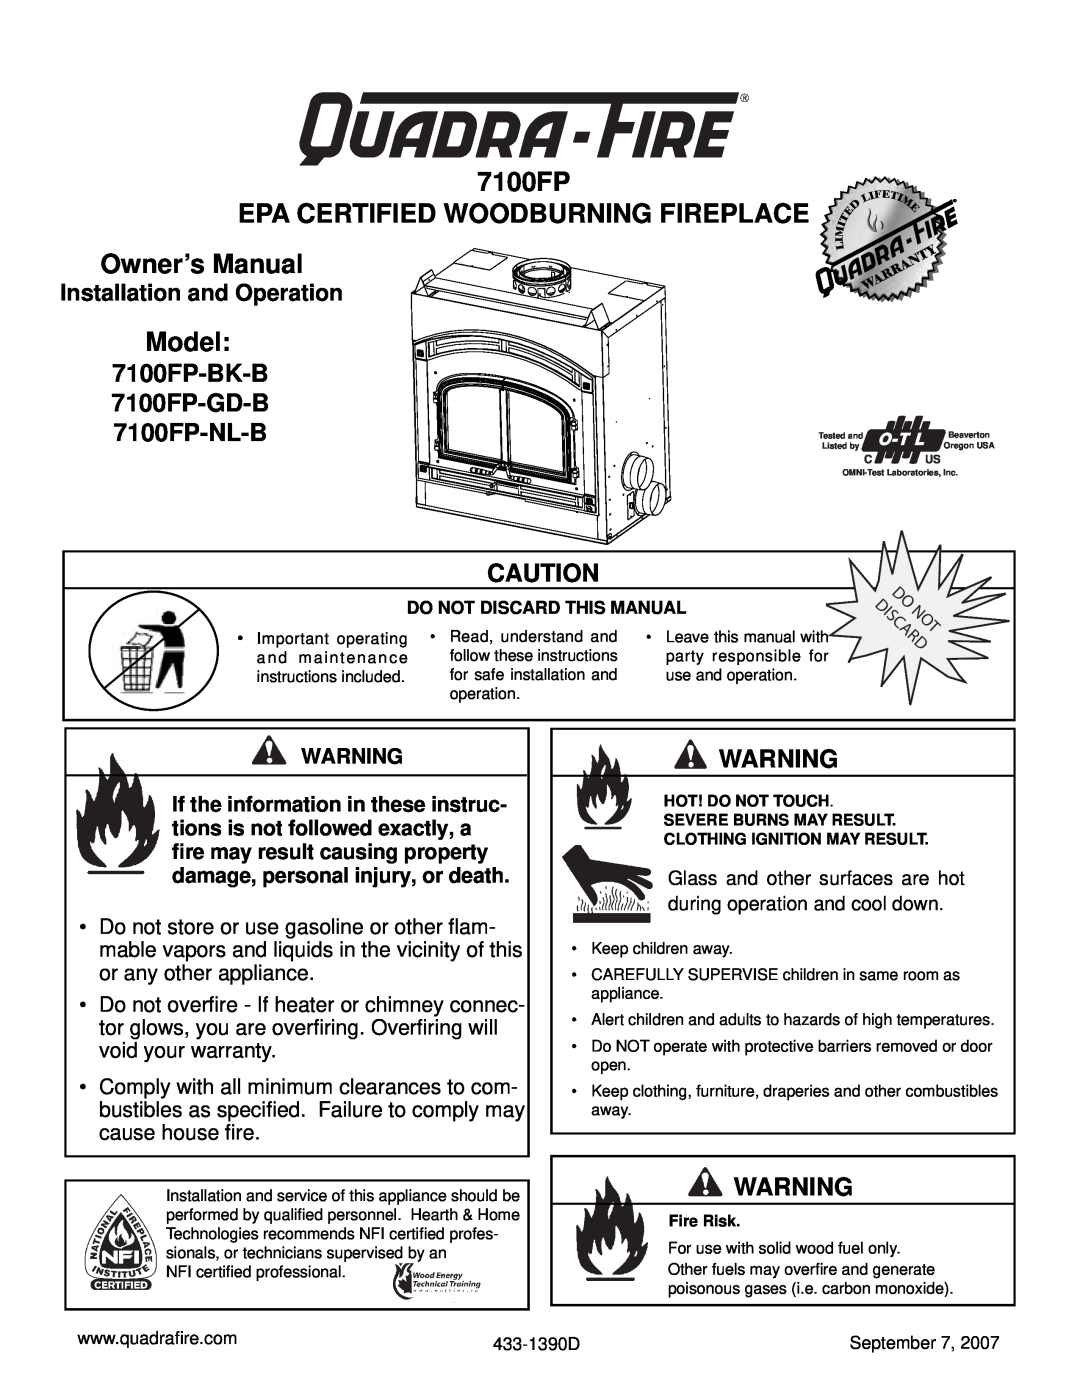 Quadra-Fire warranty 7100FP-BK-B 7100FP-GD-B 7100FP-NL-B, 7100FP EPA CERTIFIED WOODBURNING FIREPLACE, Owner’s Manual 